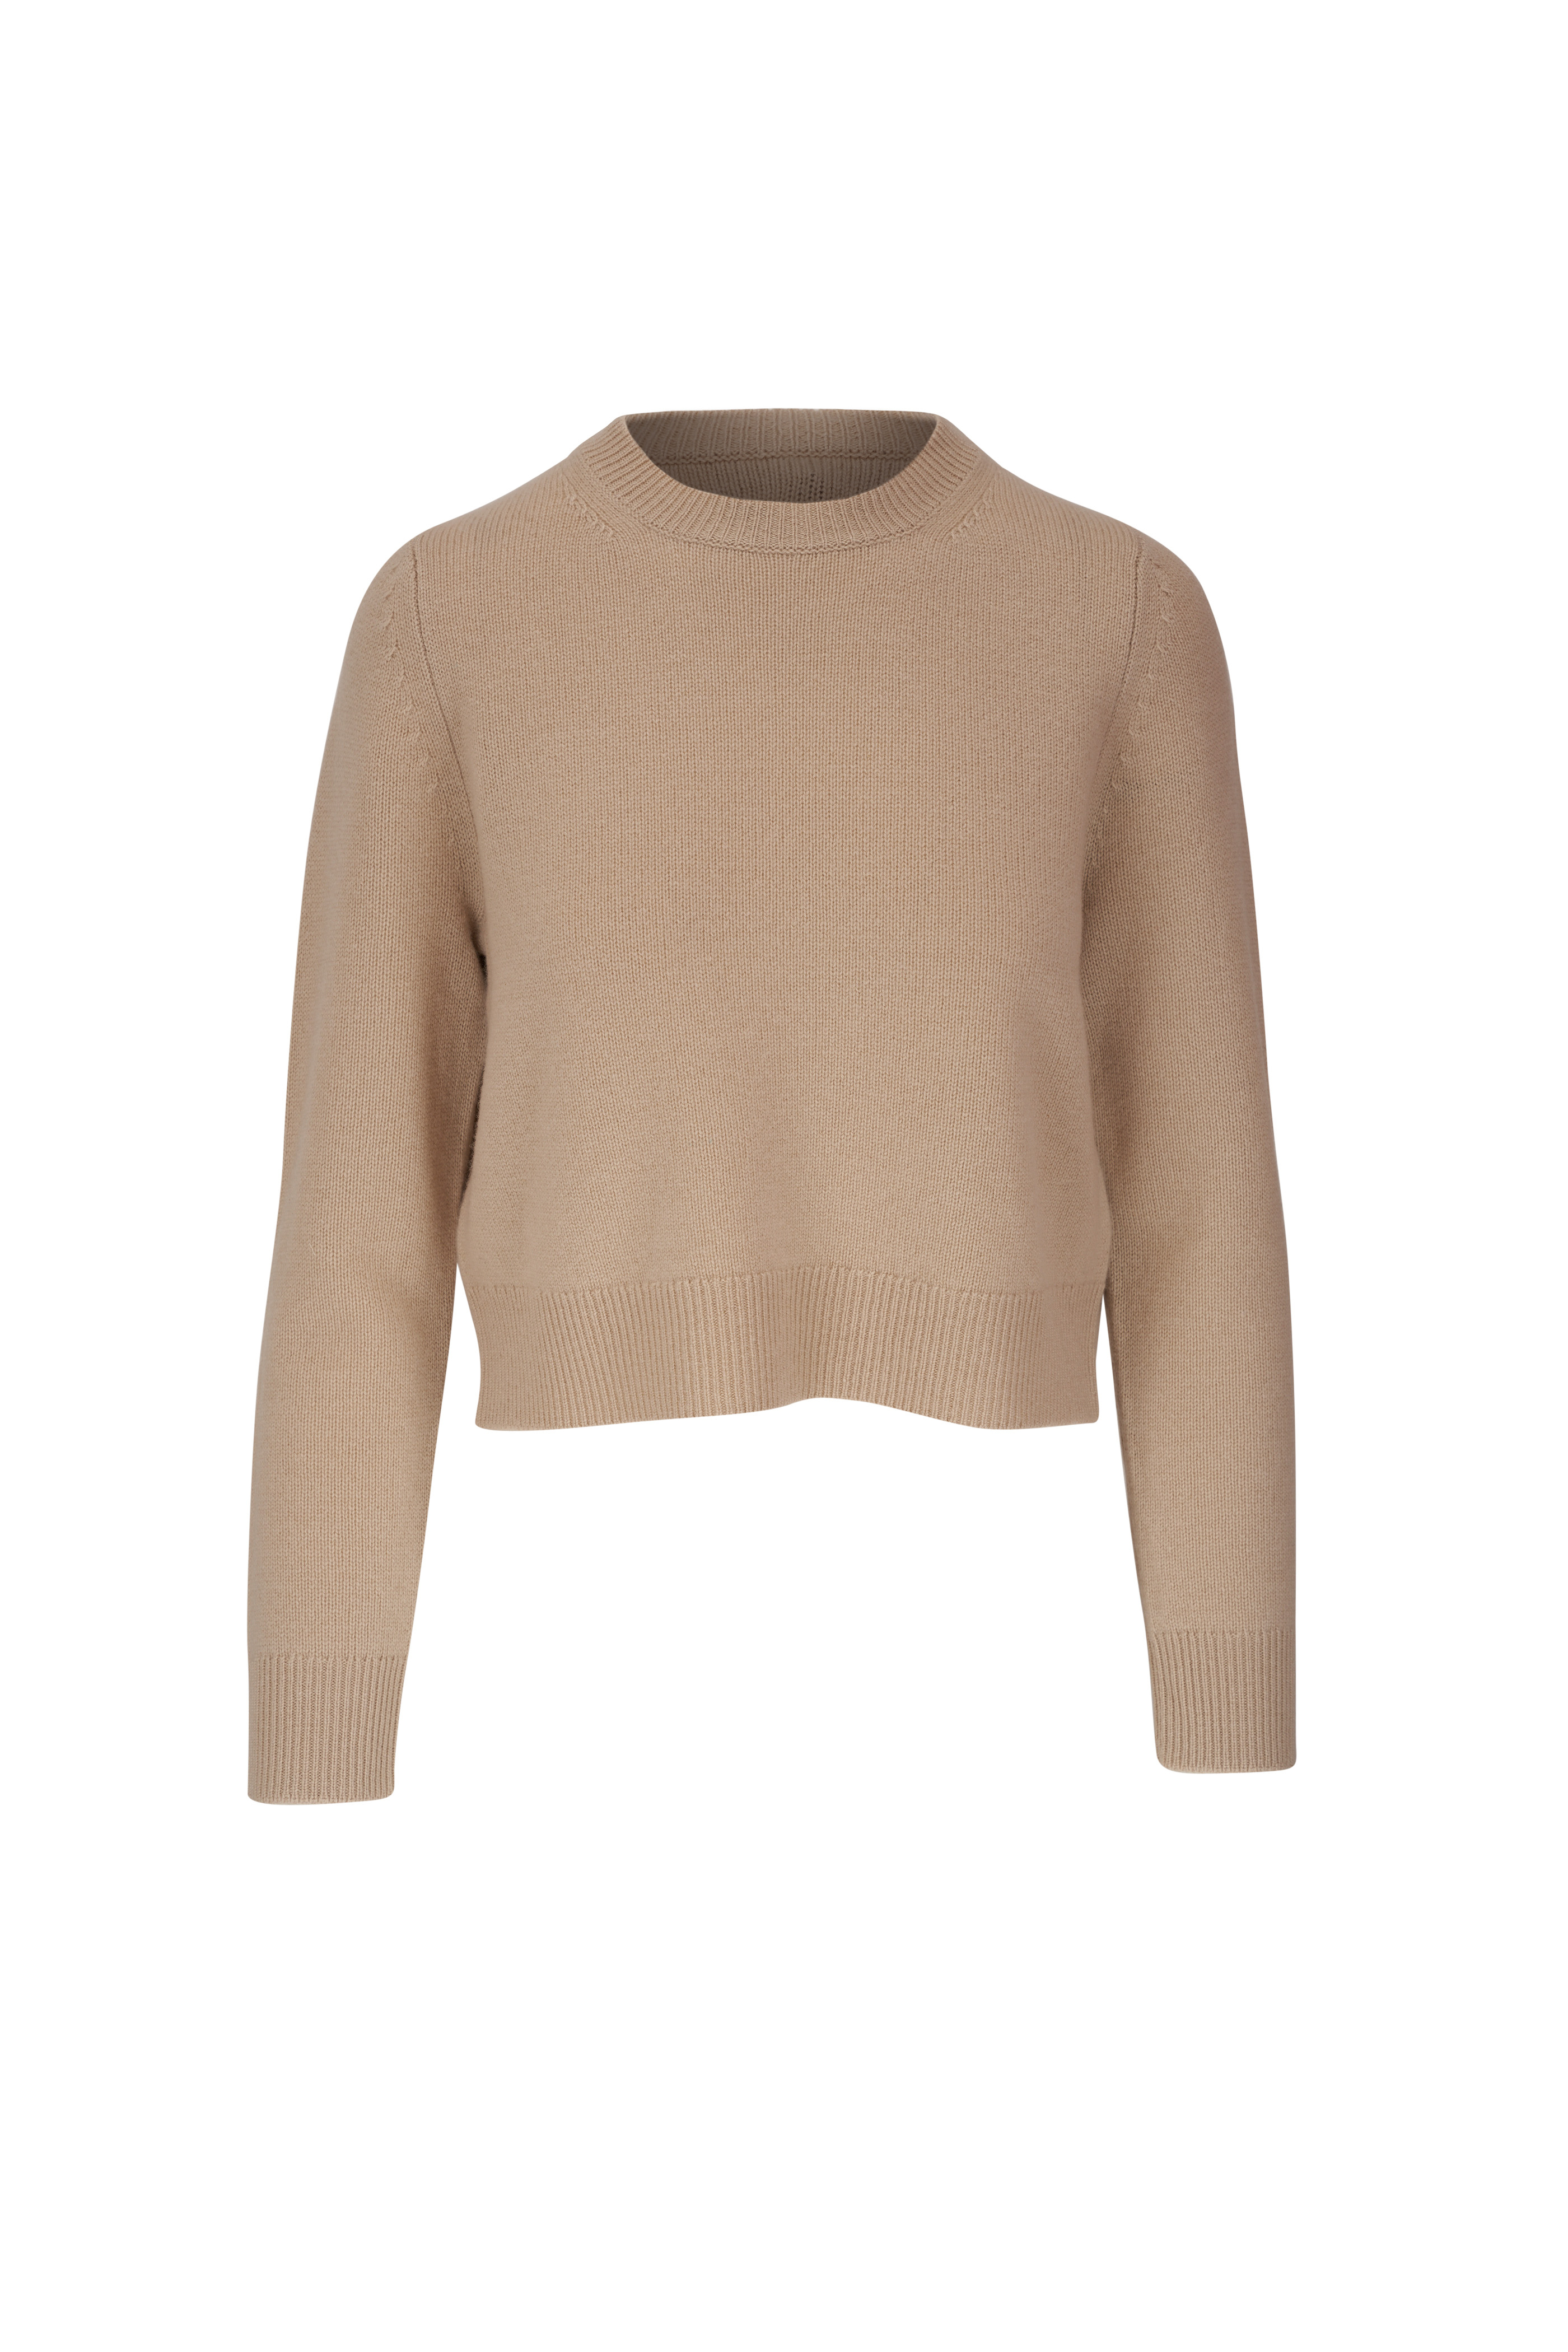 Lisa Yang The Elwinn Sweater - Sand Boucle